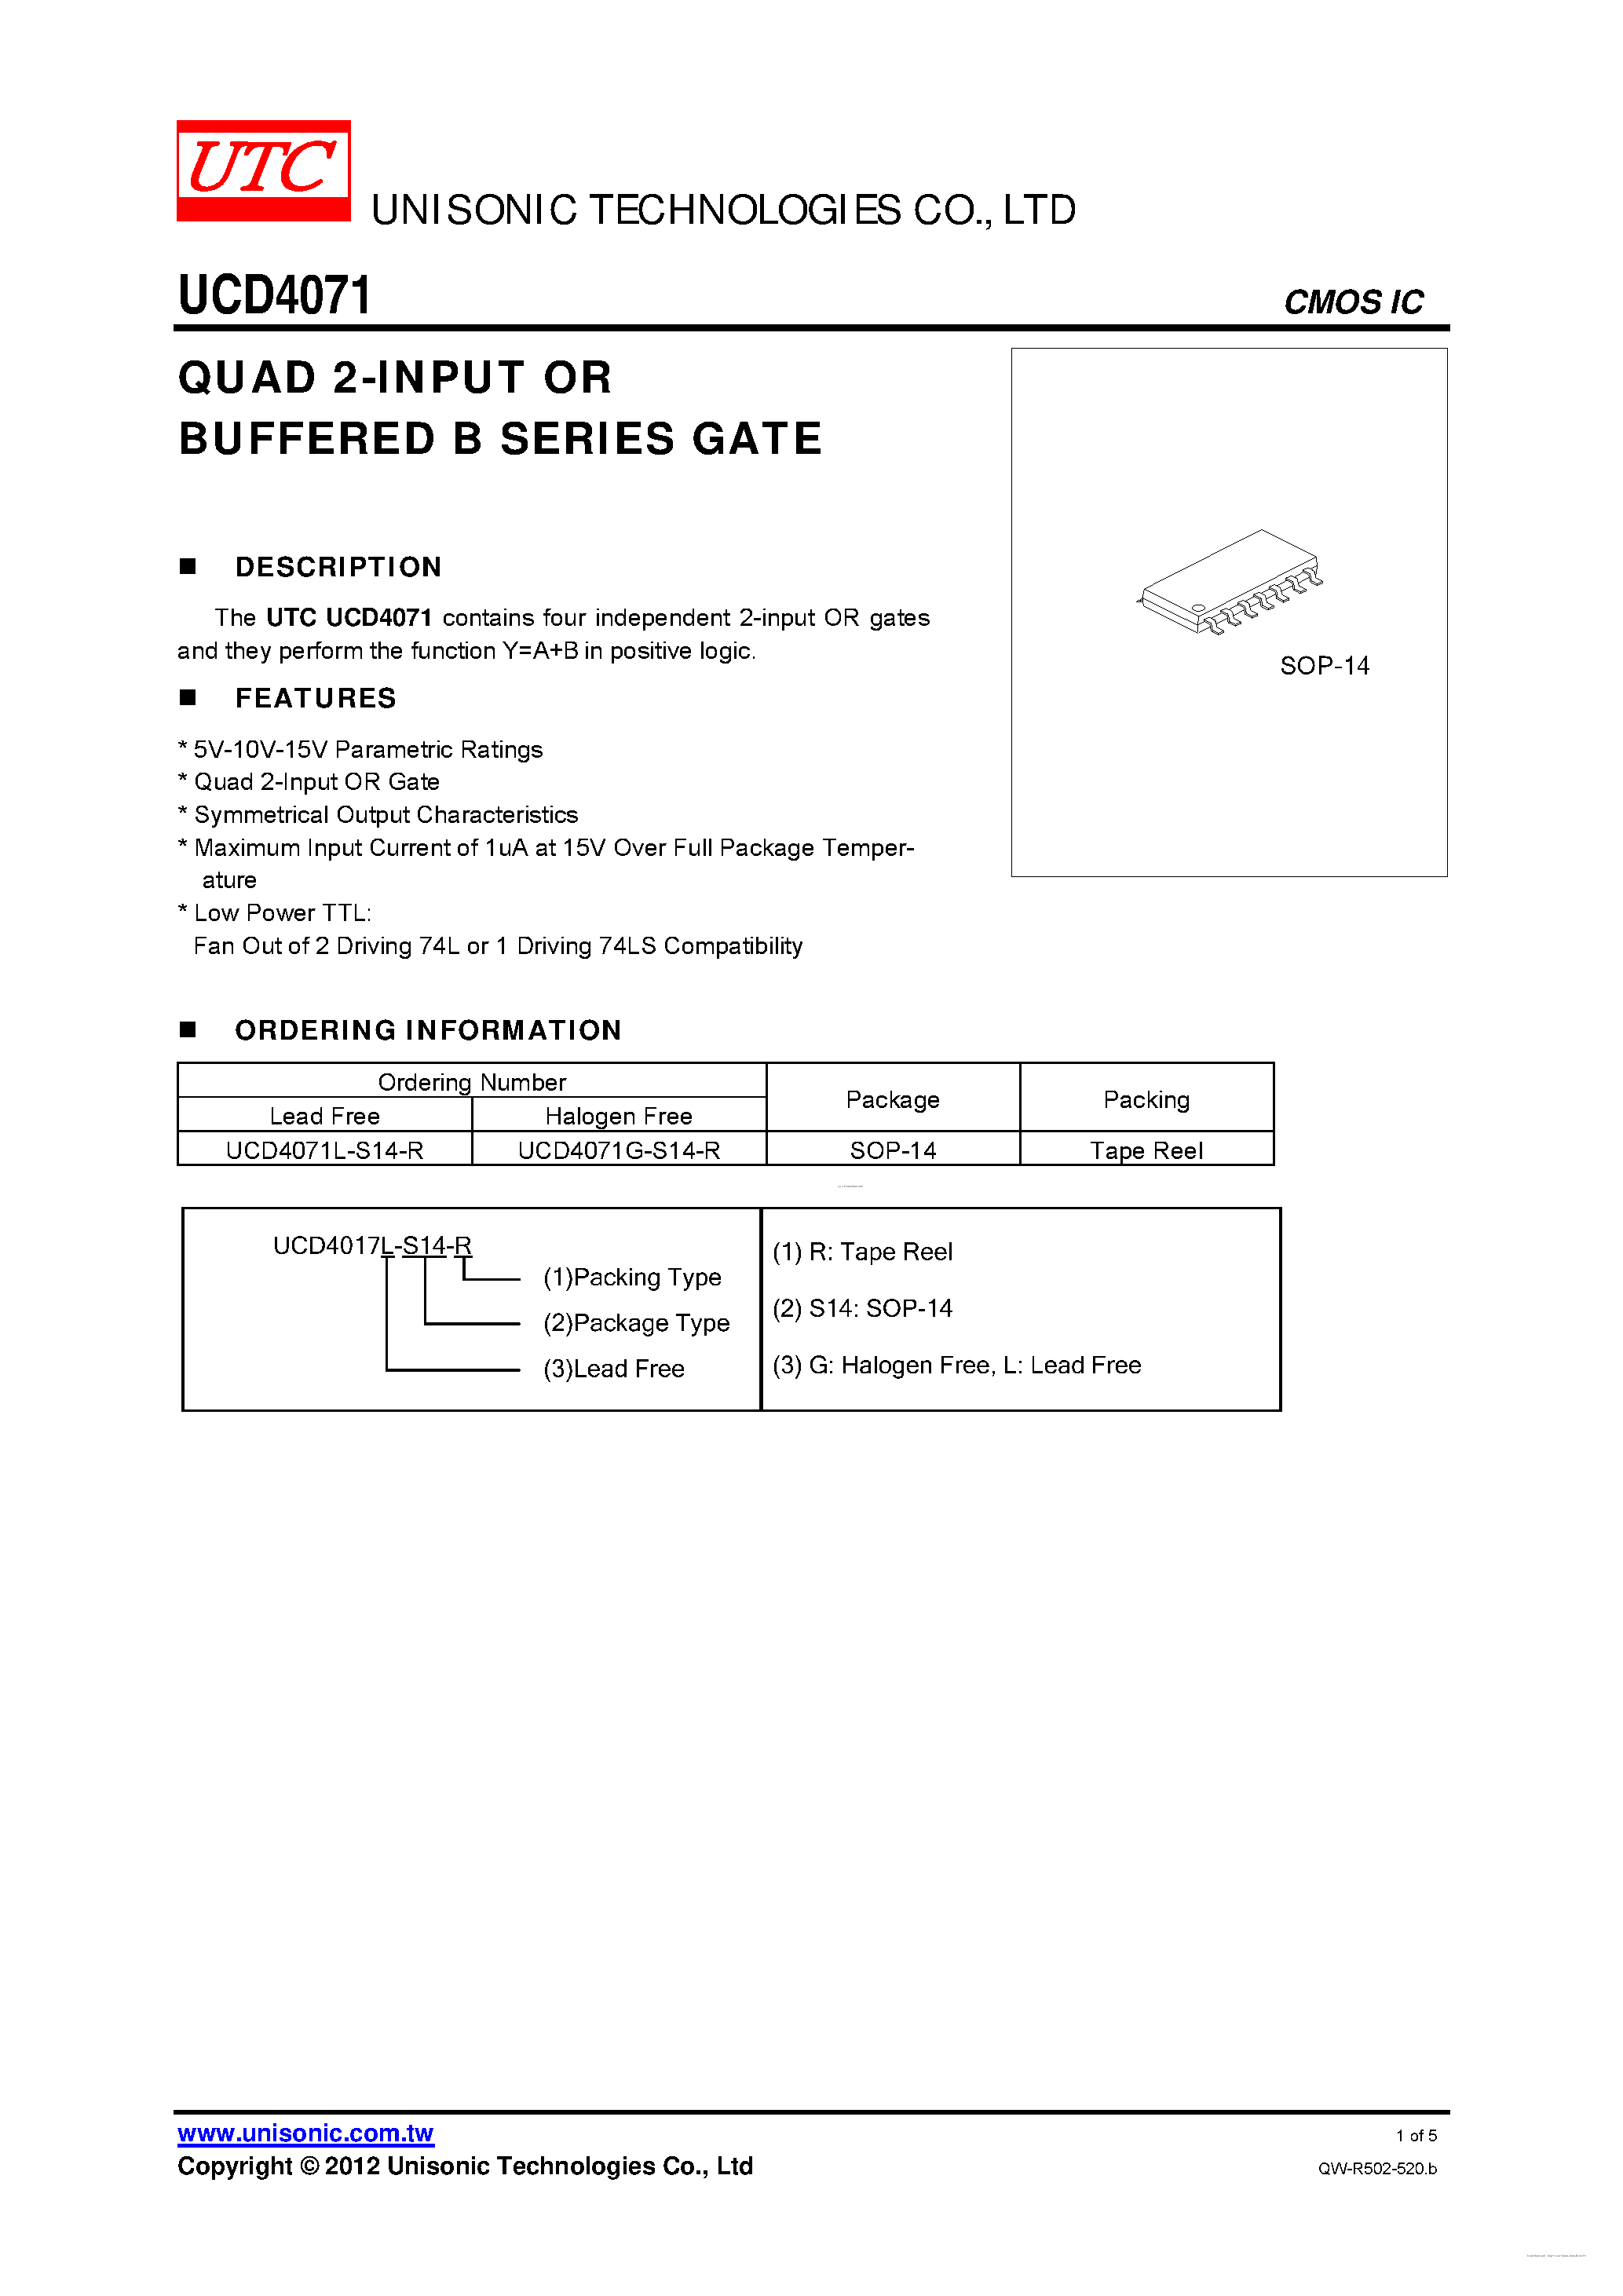 Datasheet UCD4071 - QUAD 2-INPUT OR BUFFERED B SERIES GATE page 1